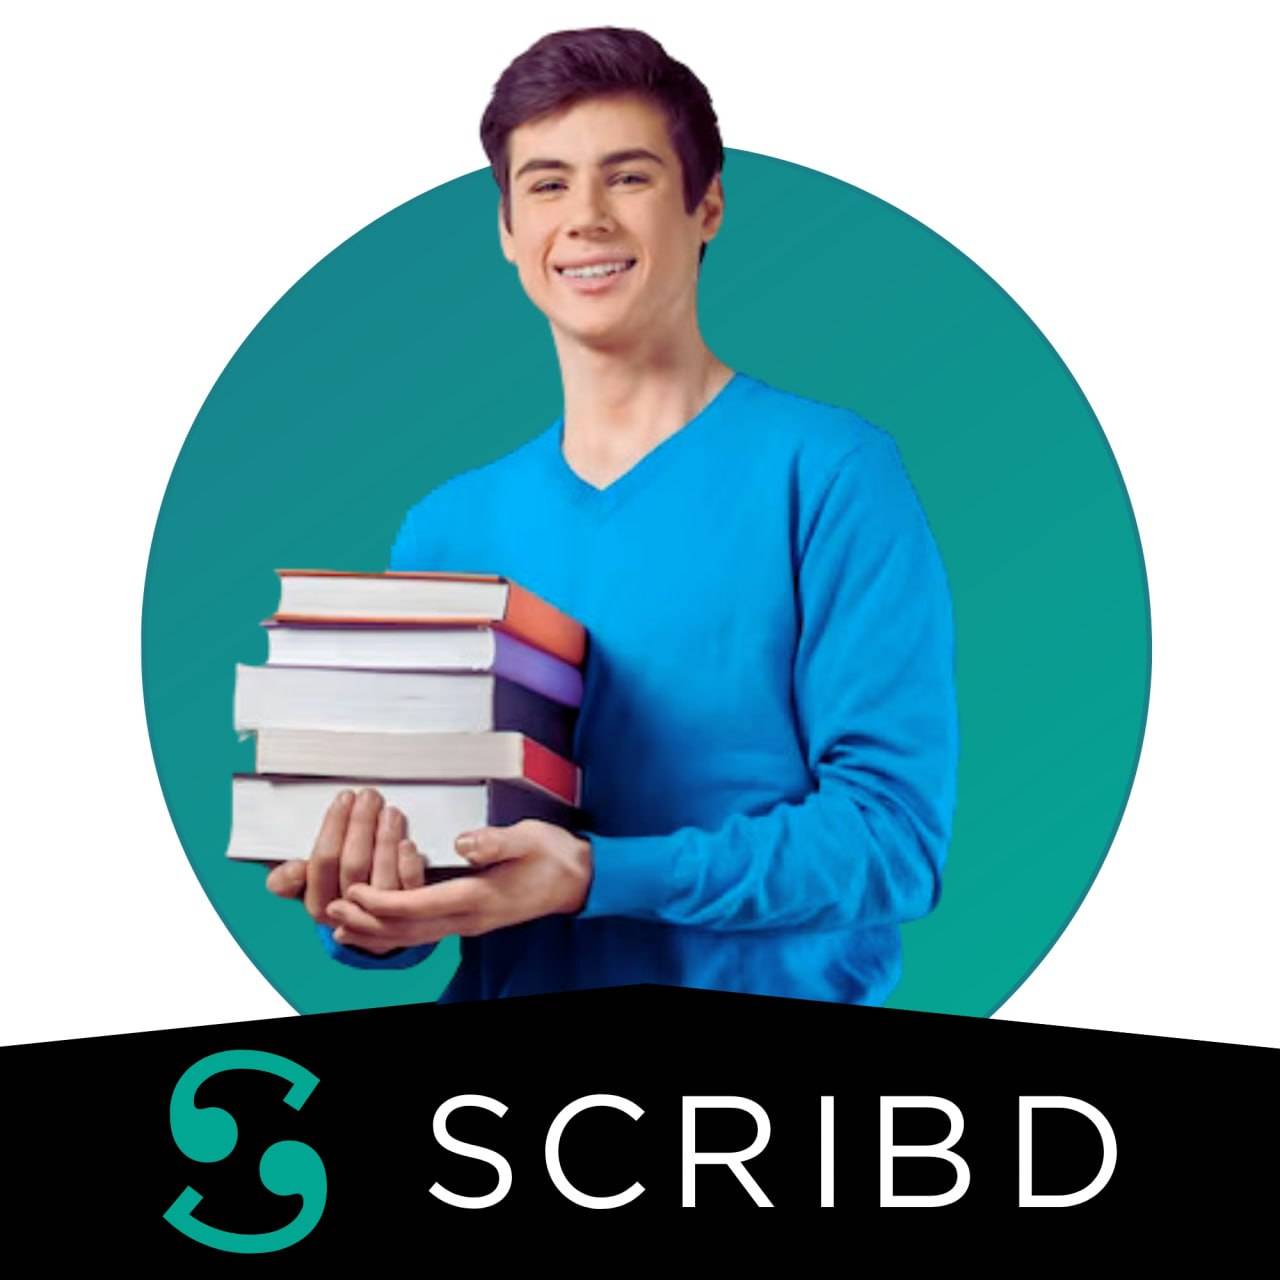 scrbid - home page